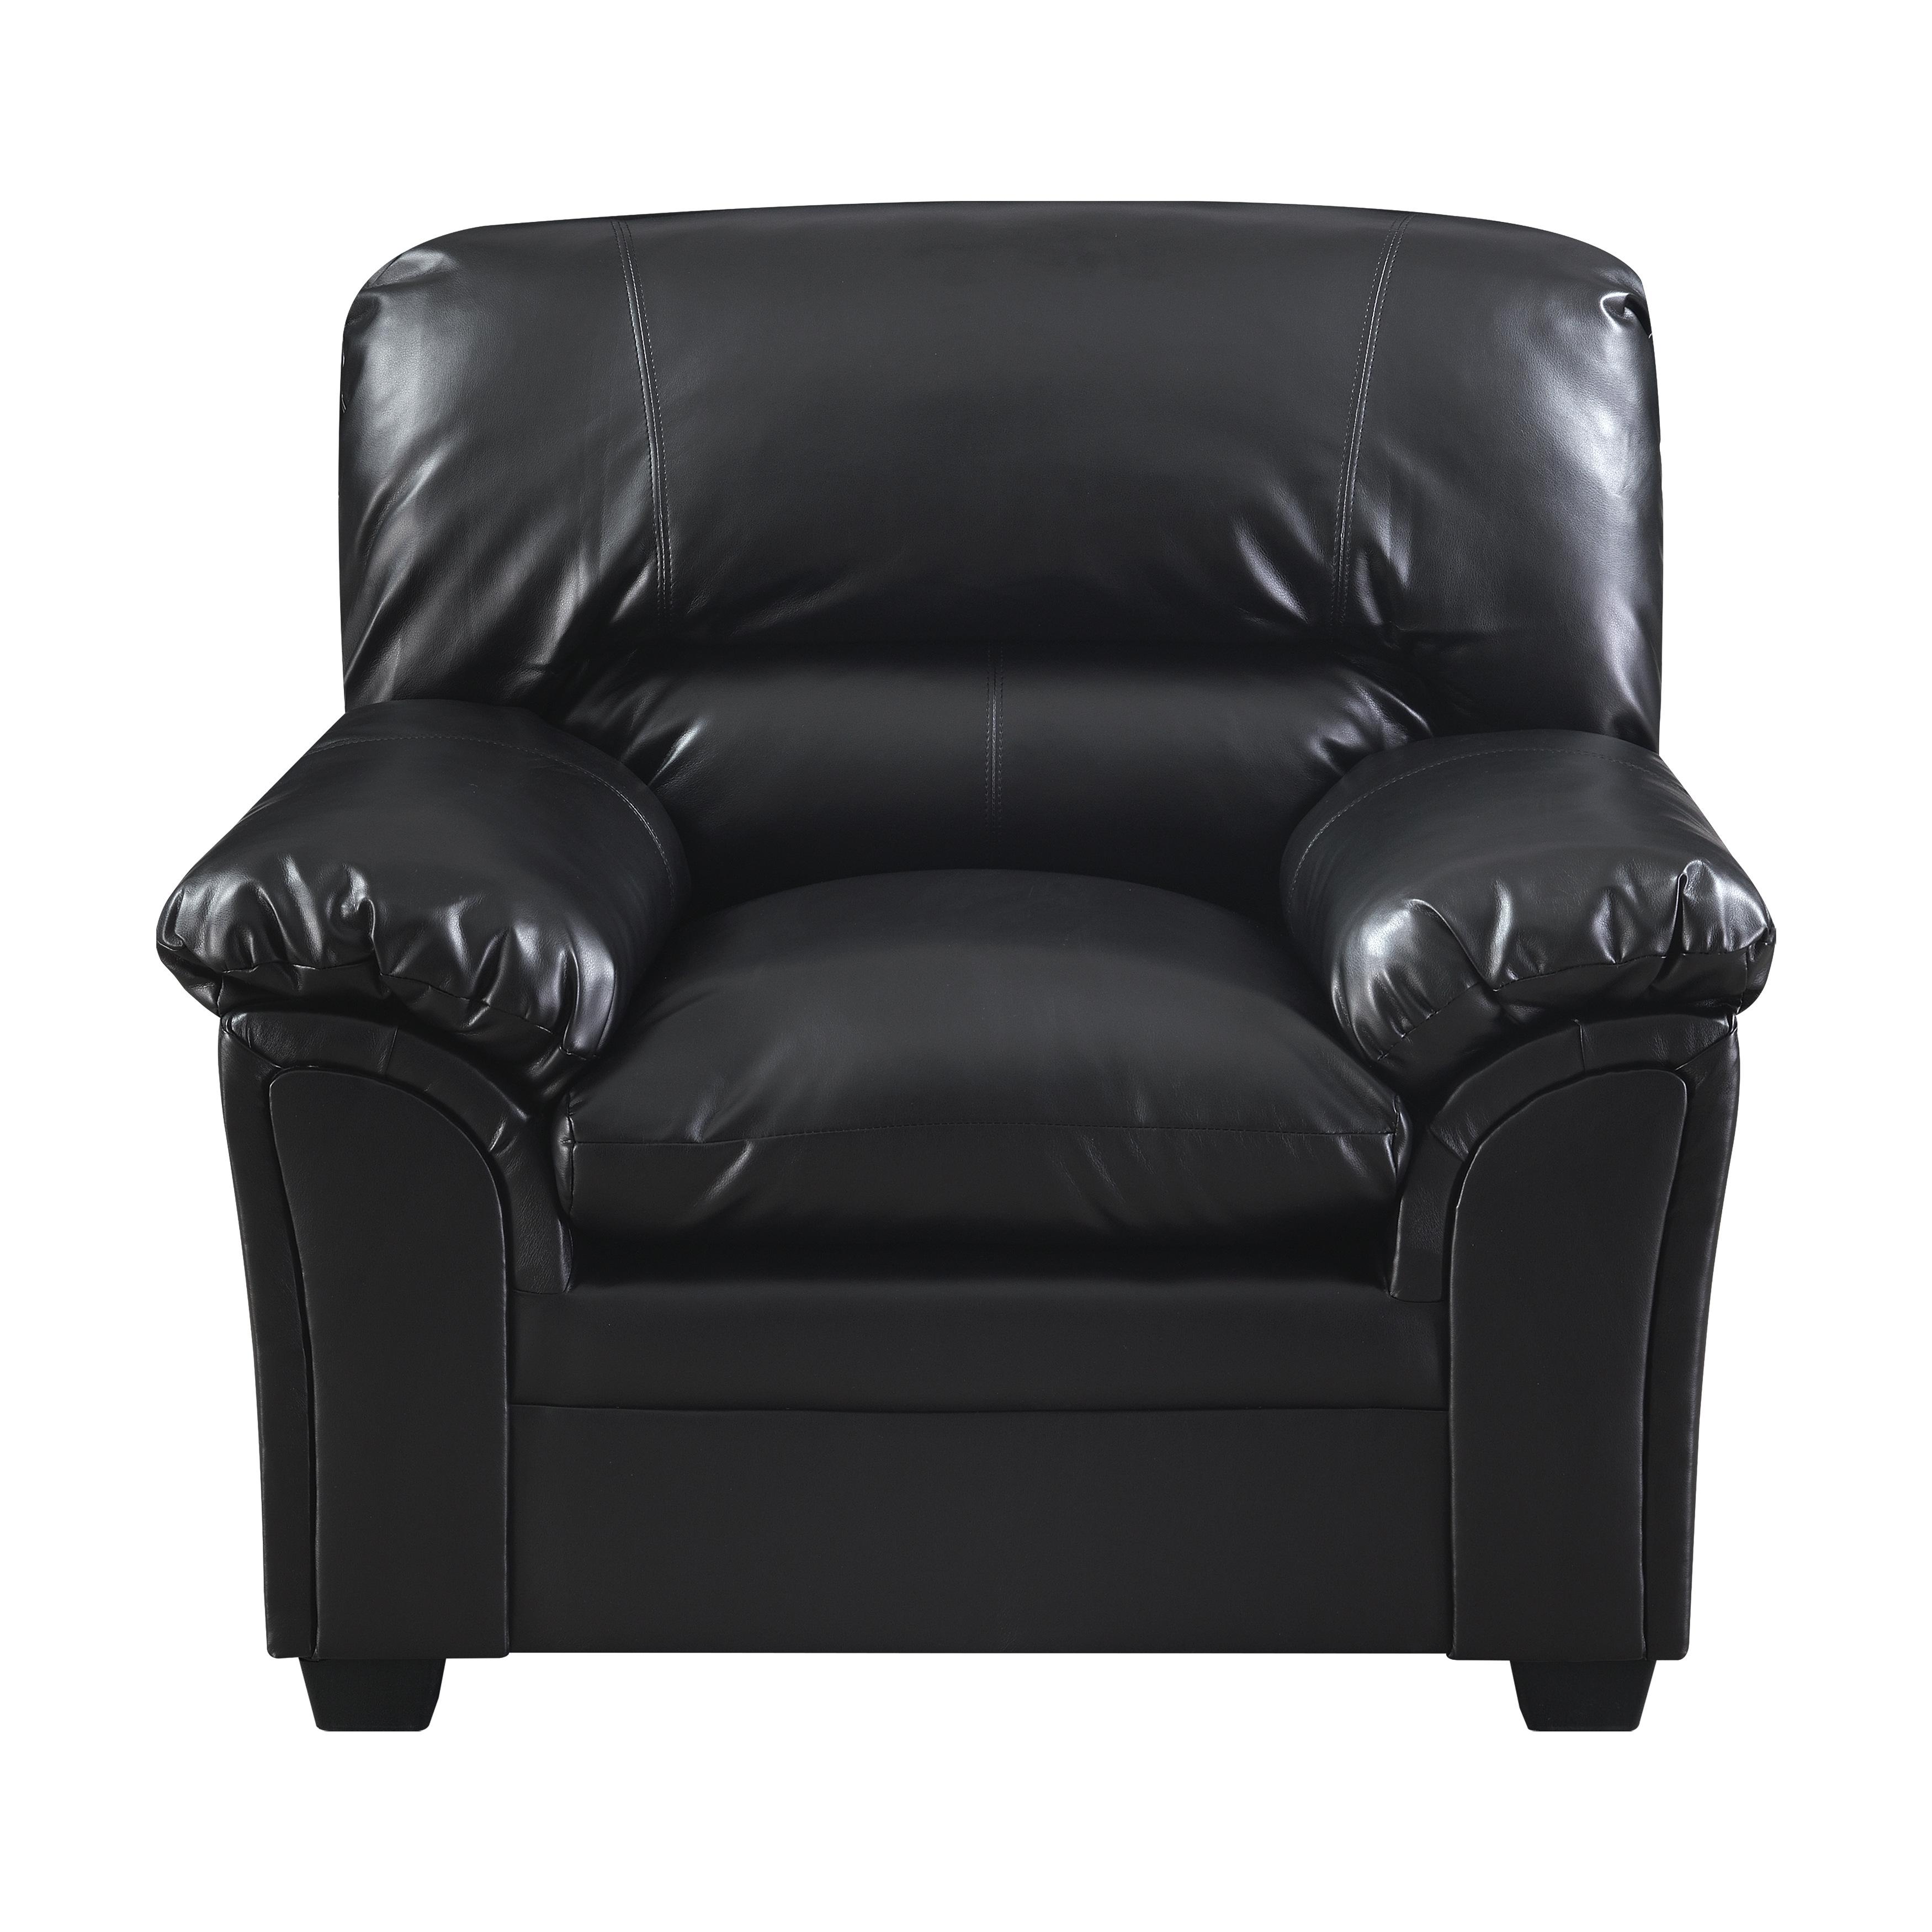 Transitional Arm Chair 8511BK-1 Talon 8511BK-1 in Black Faux Leather